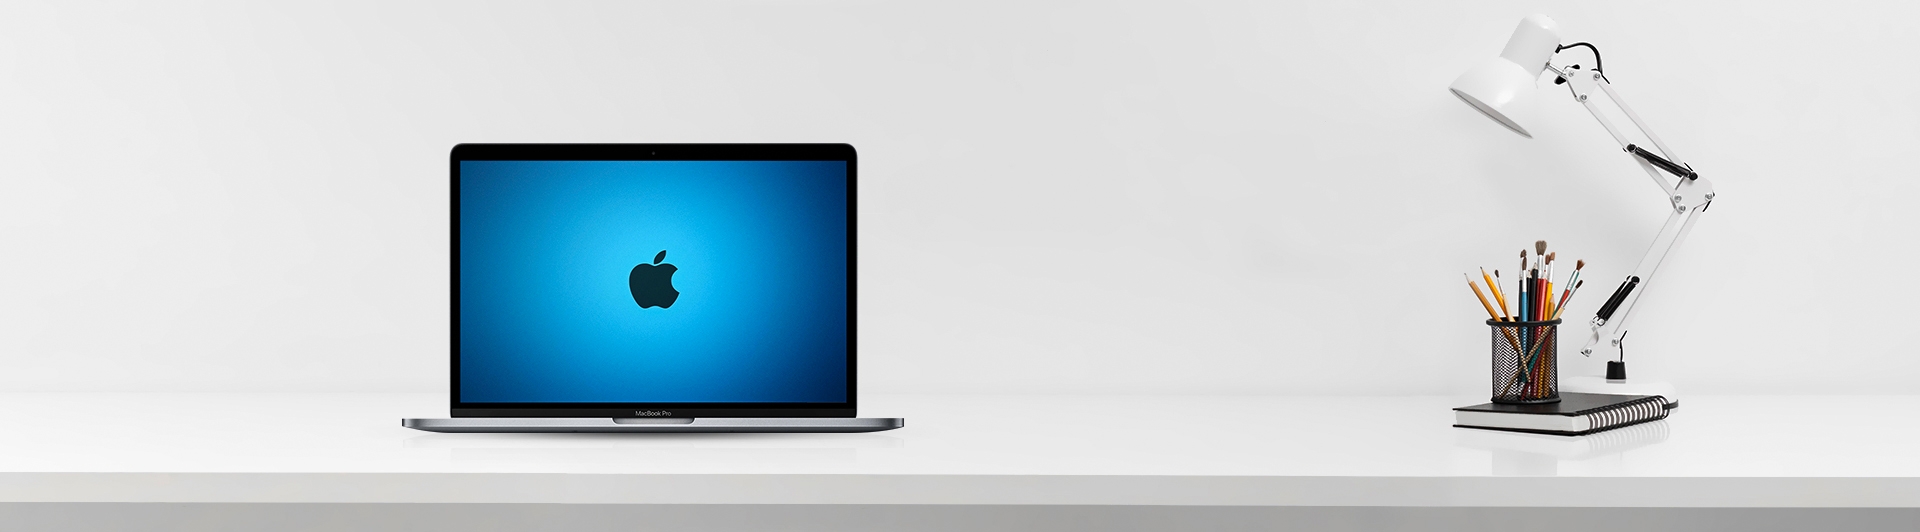 Apple Macbook Pro i5 13.3 inch MWP42SA/A 2020